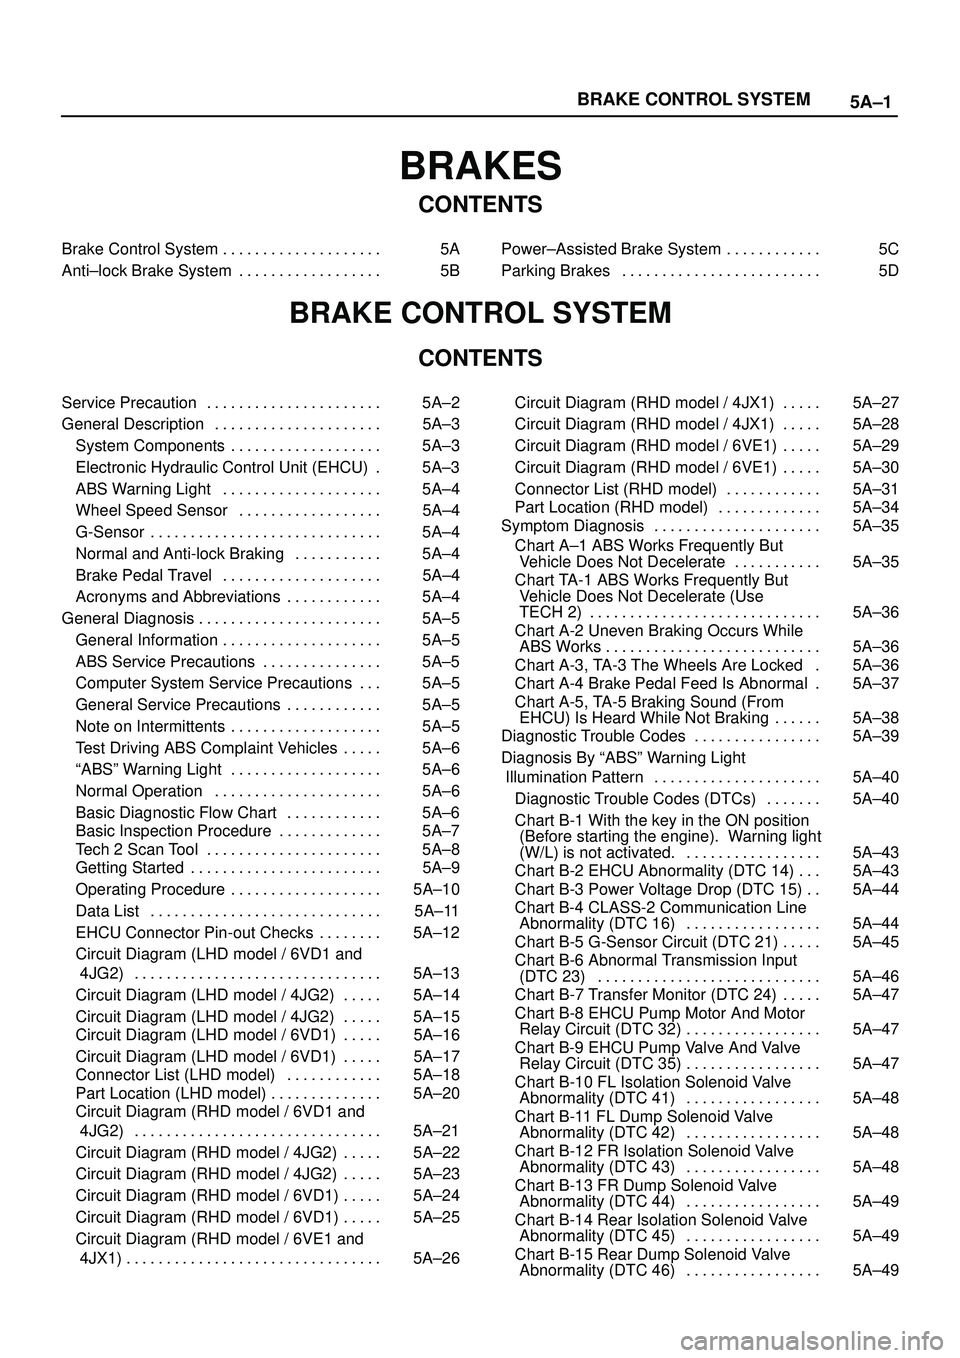 ISUZU TROOPER 1998  Service Repair Manual 5A±1 BRAKE CONTROL SYSTEM
BRAKES
CONTENTS
Brake Control System 5A. . . . . . . . . . . . . . . . . . . . 
Anti±lock Brake System 5B. . . . . . . . . . . . . . . . . . Power±Assisted Brake System 5C